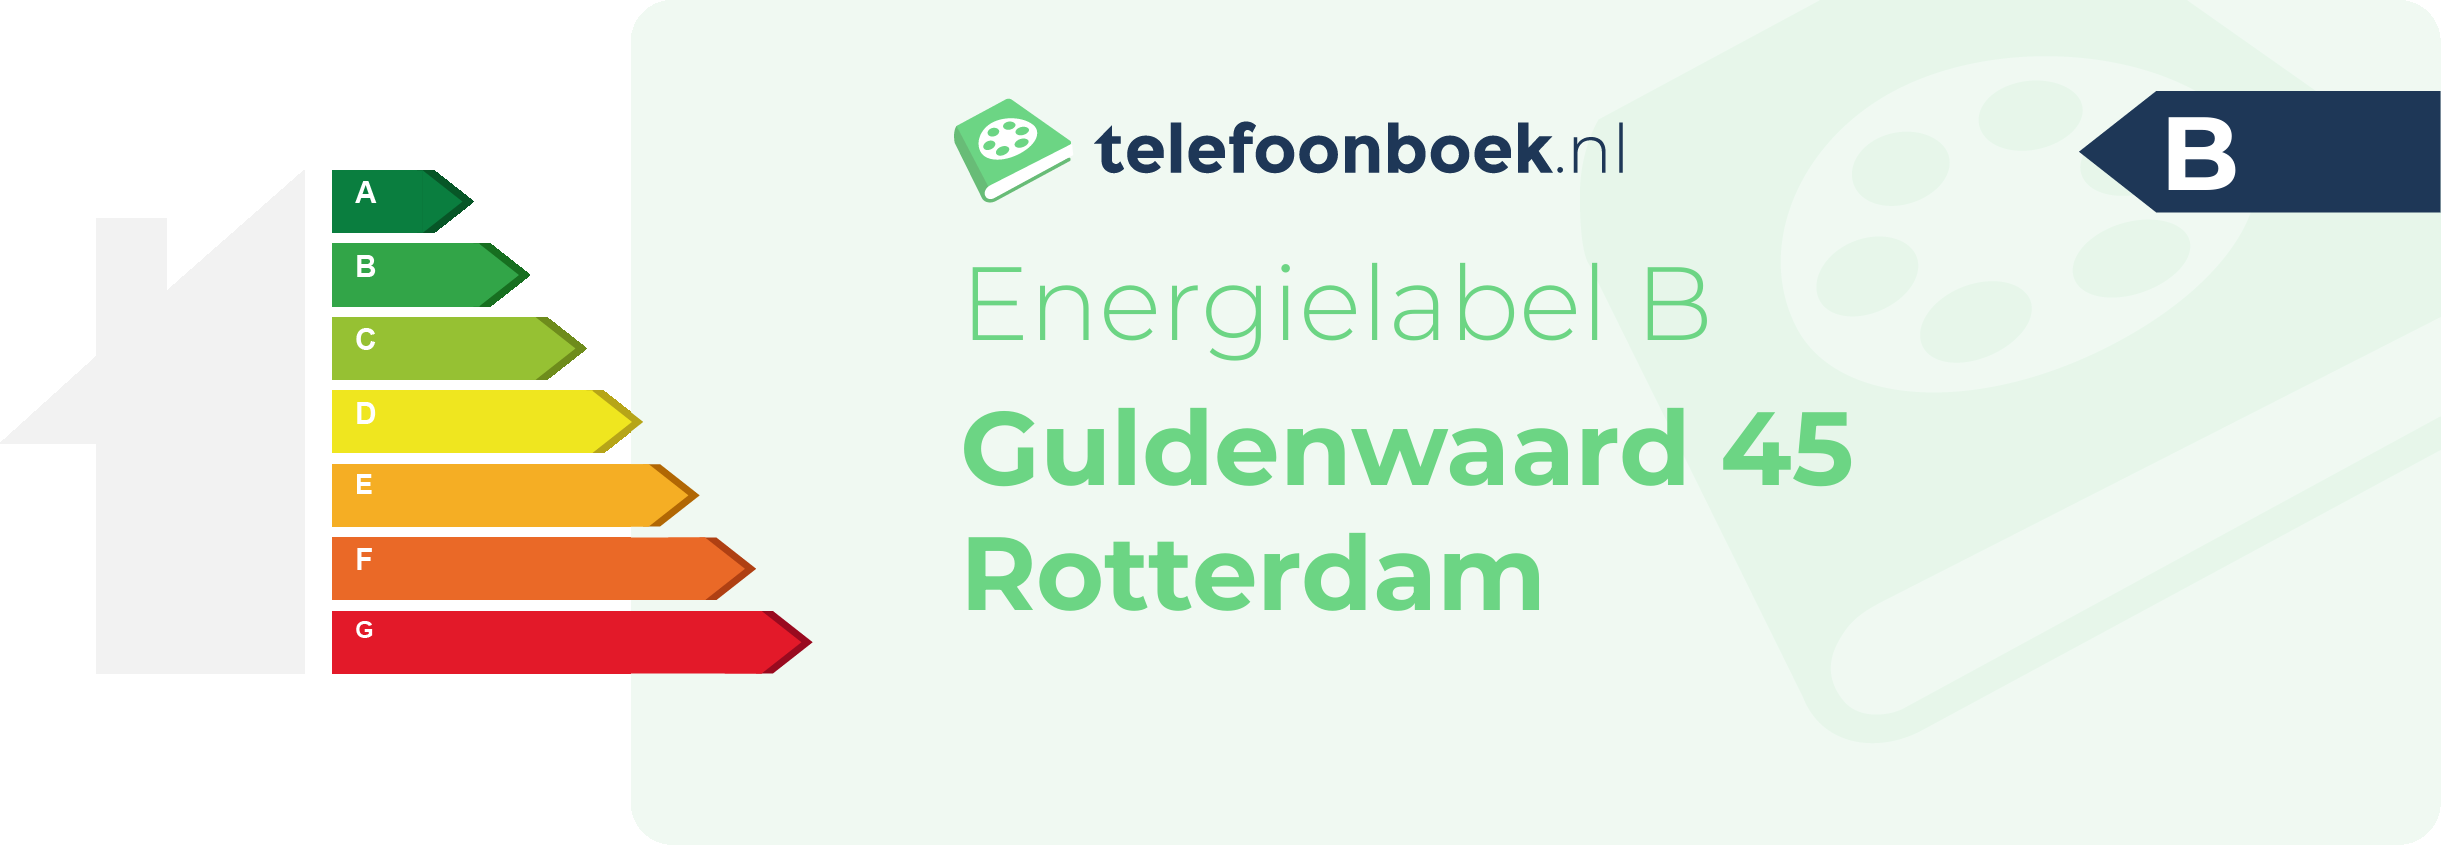 Energielabel Guldenwaard 45 Rotterdam